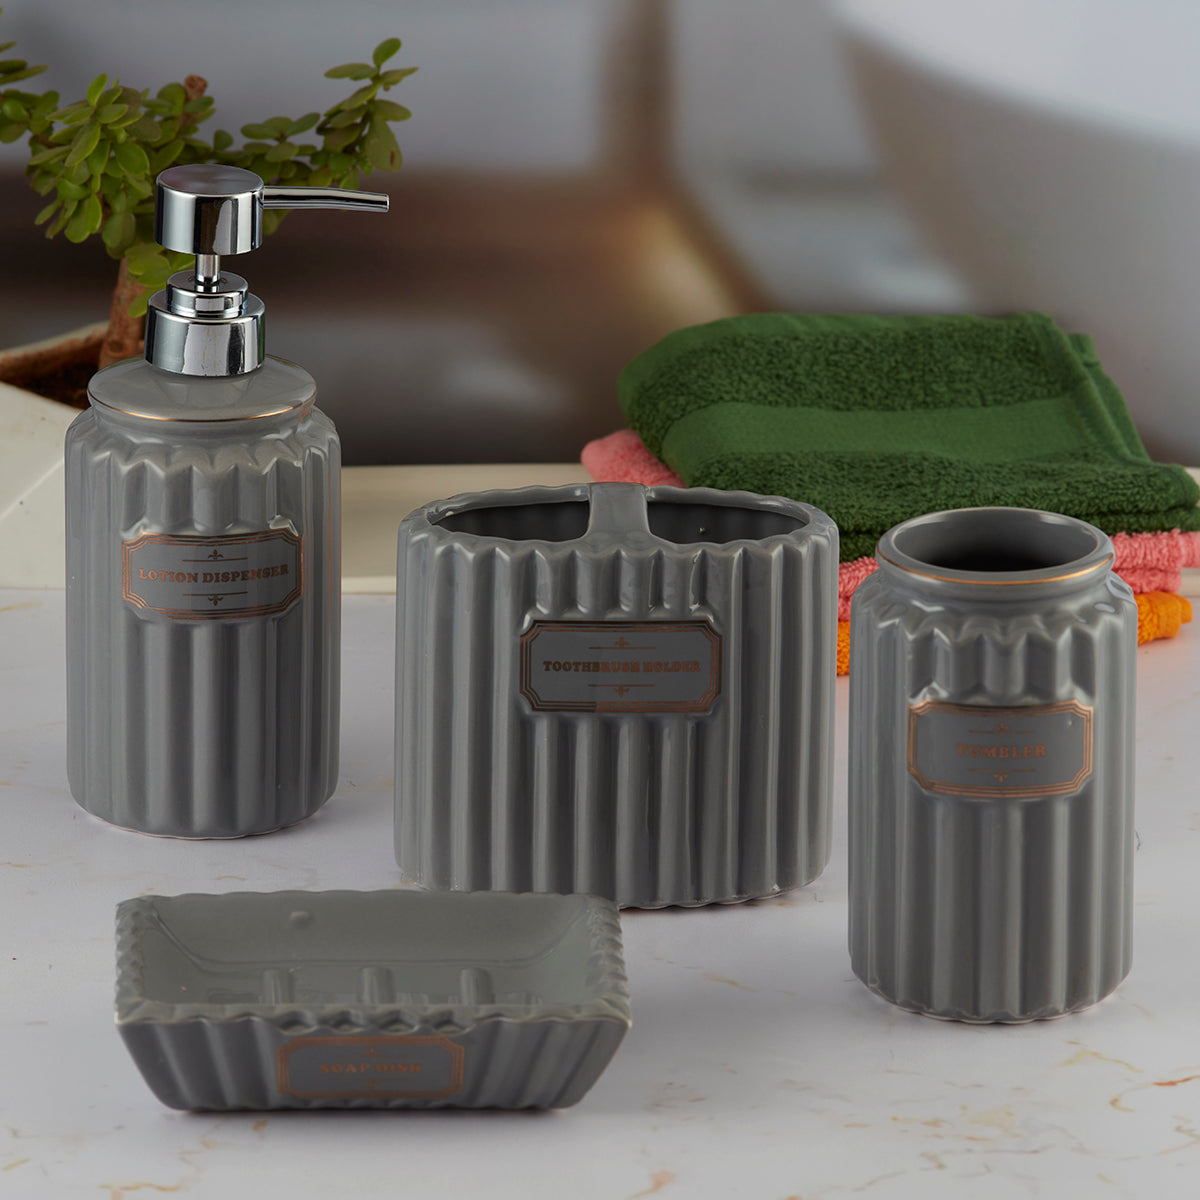 Ceramic Bathroom Accessories Set of 4 Bath Set with Soap Dispenser (8178)